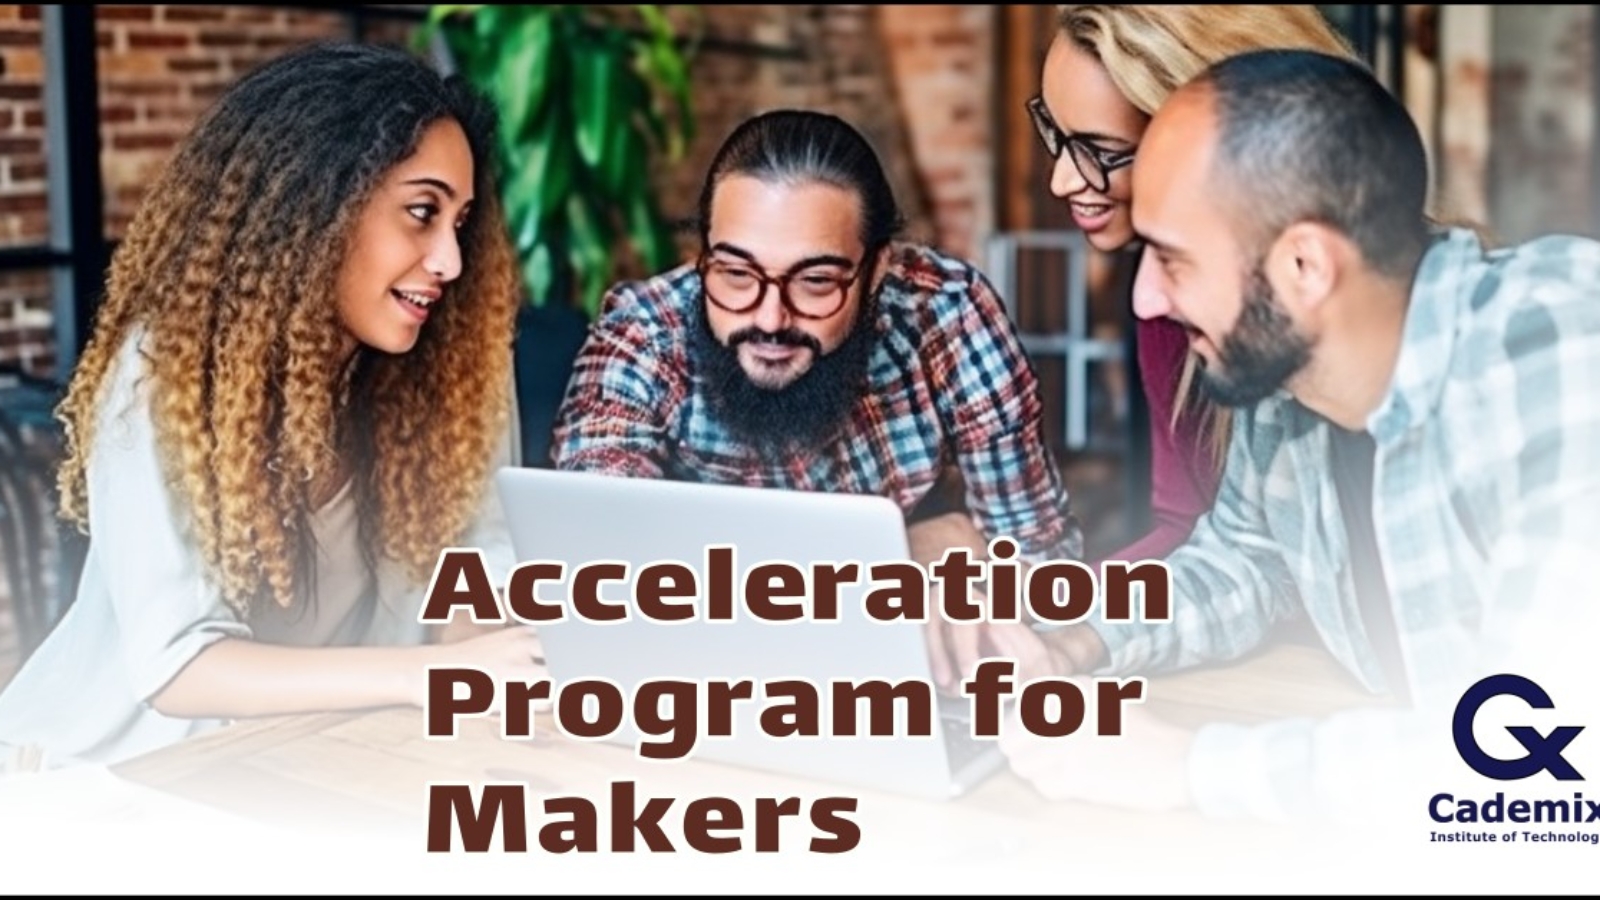 Cademix Acceleration Program for Makers